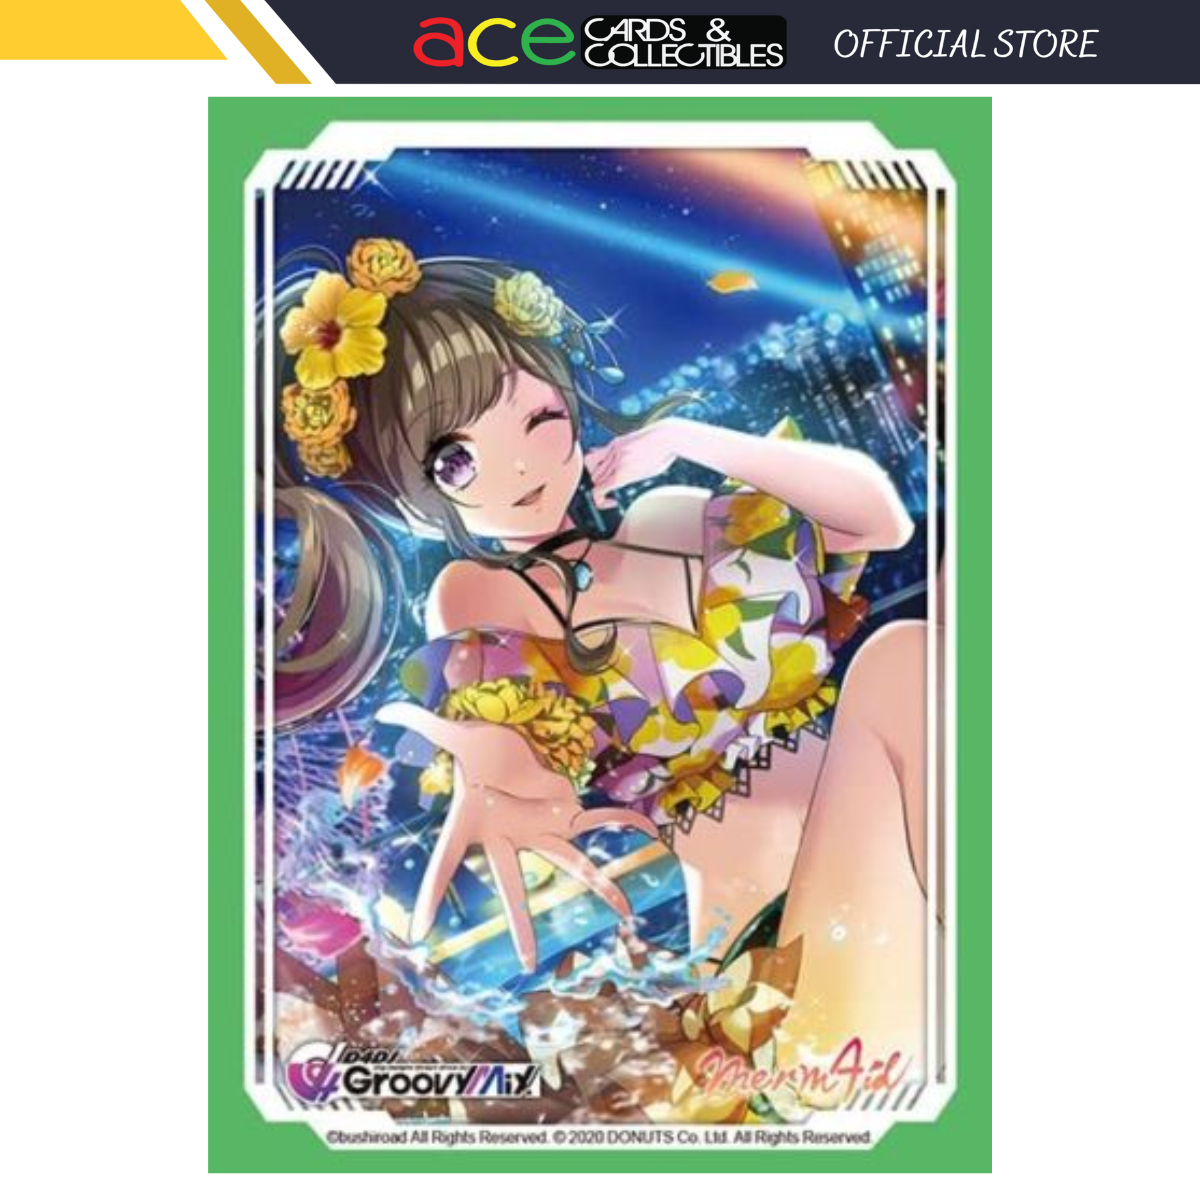 Bushiroad 75 Sleeve Collection HG Vol.3584 - D4DJ Groovy Mix "Marika Mizushima"-Bushiroad-Ace Cards & Collectibles